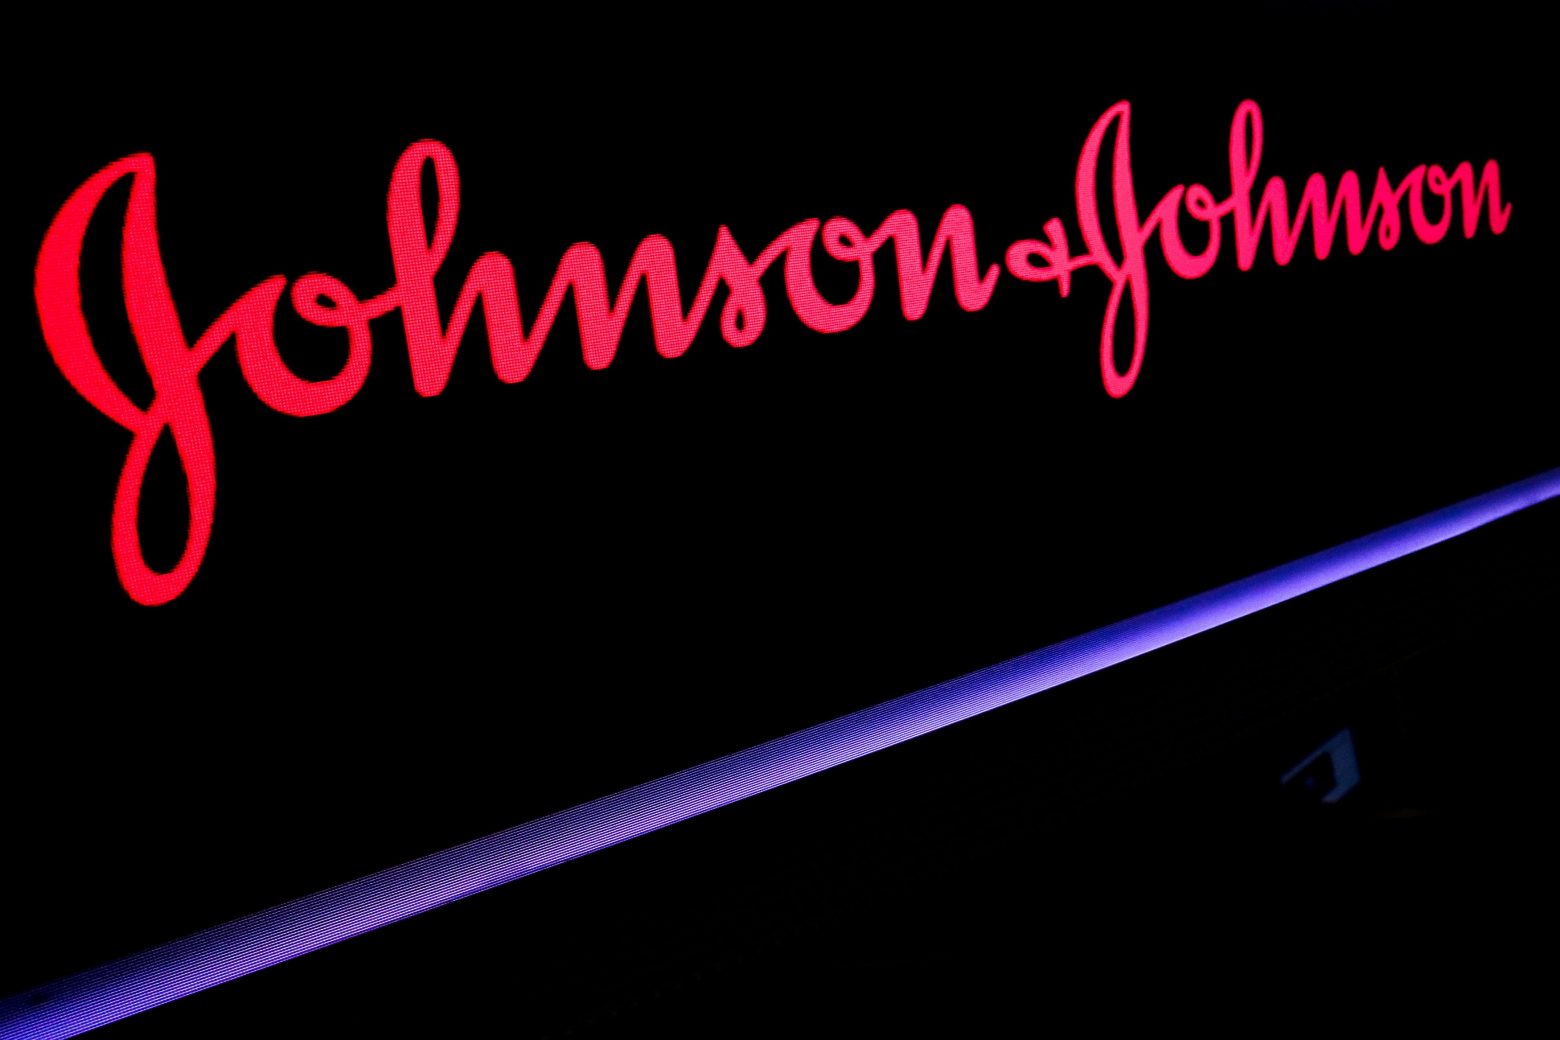 Johnson & Johnson - Ειδικοί συστήνουν να γίνει και δεύτερη δόση από το μέχρι τώρα μονοδοσικό εμβόλιο